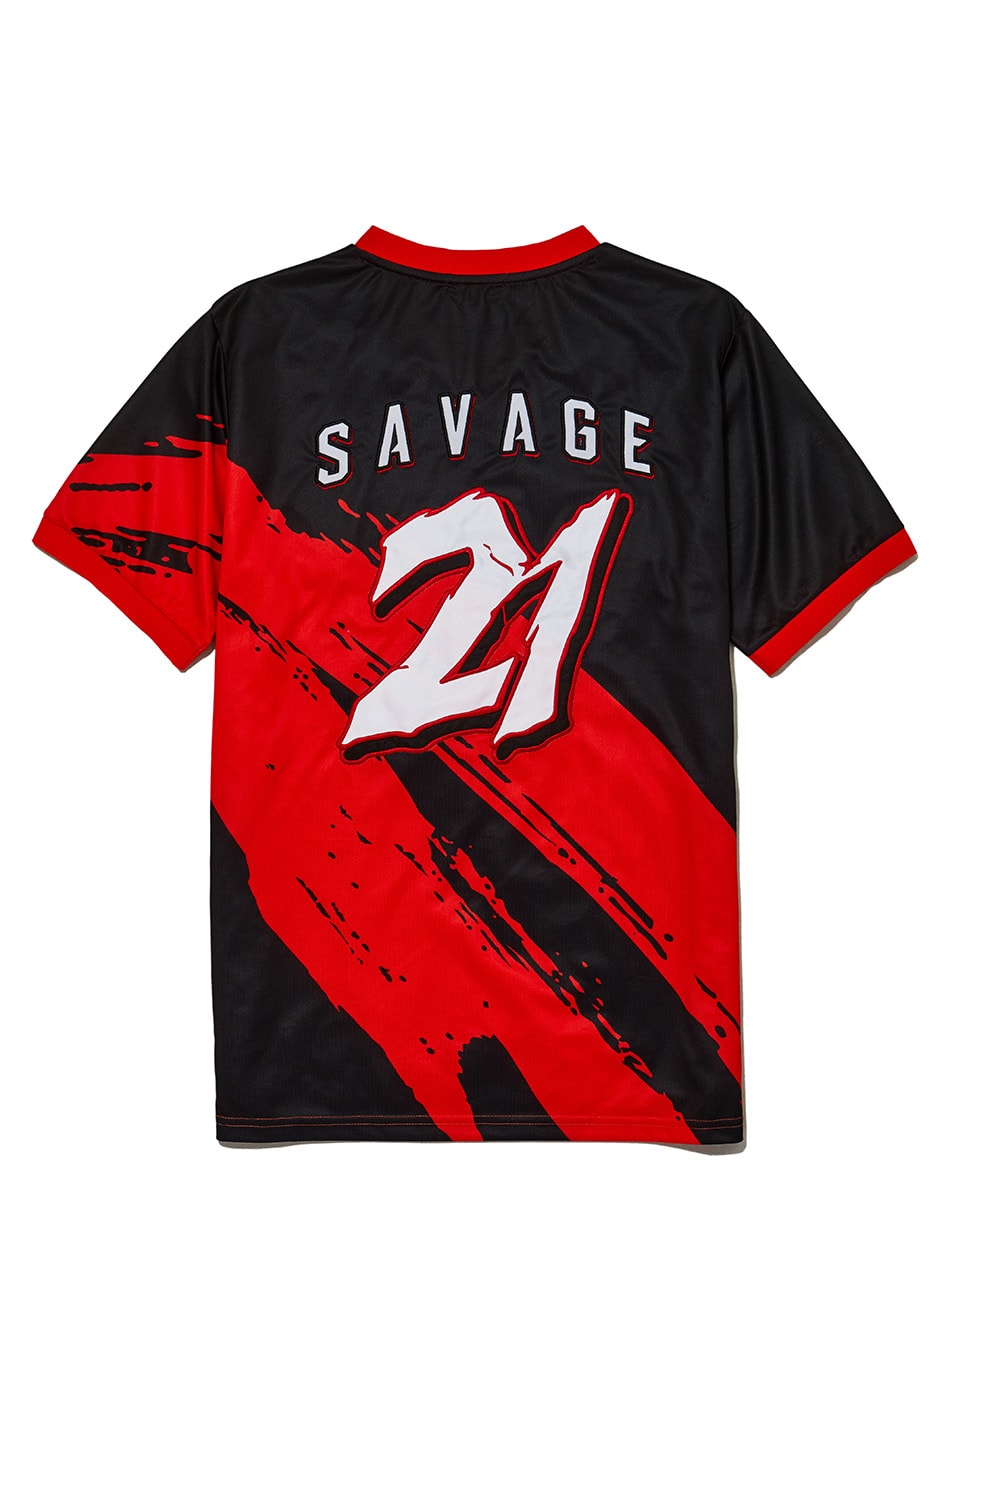 Bleacher Report World Cup Hip Hop Collection 21 Savage Vic Mensa Vince Staples The Roots YBN Nahmir Smokepurpp Jerseys